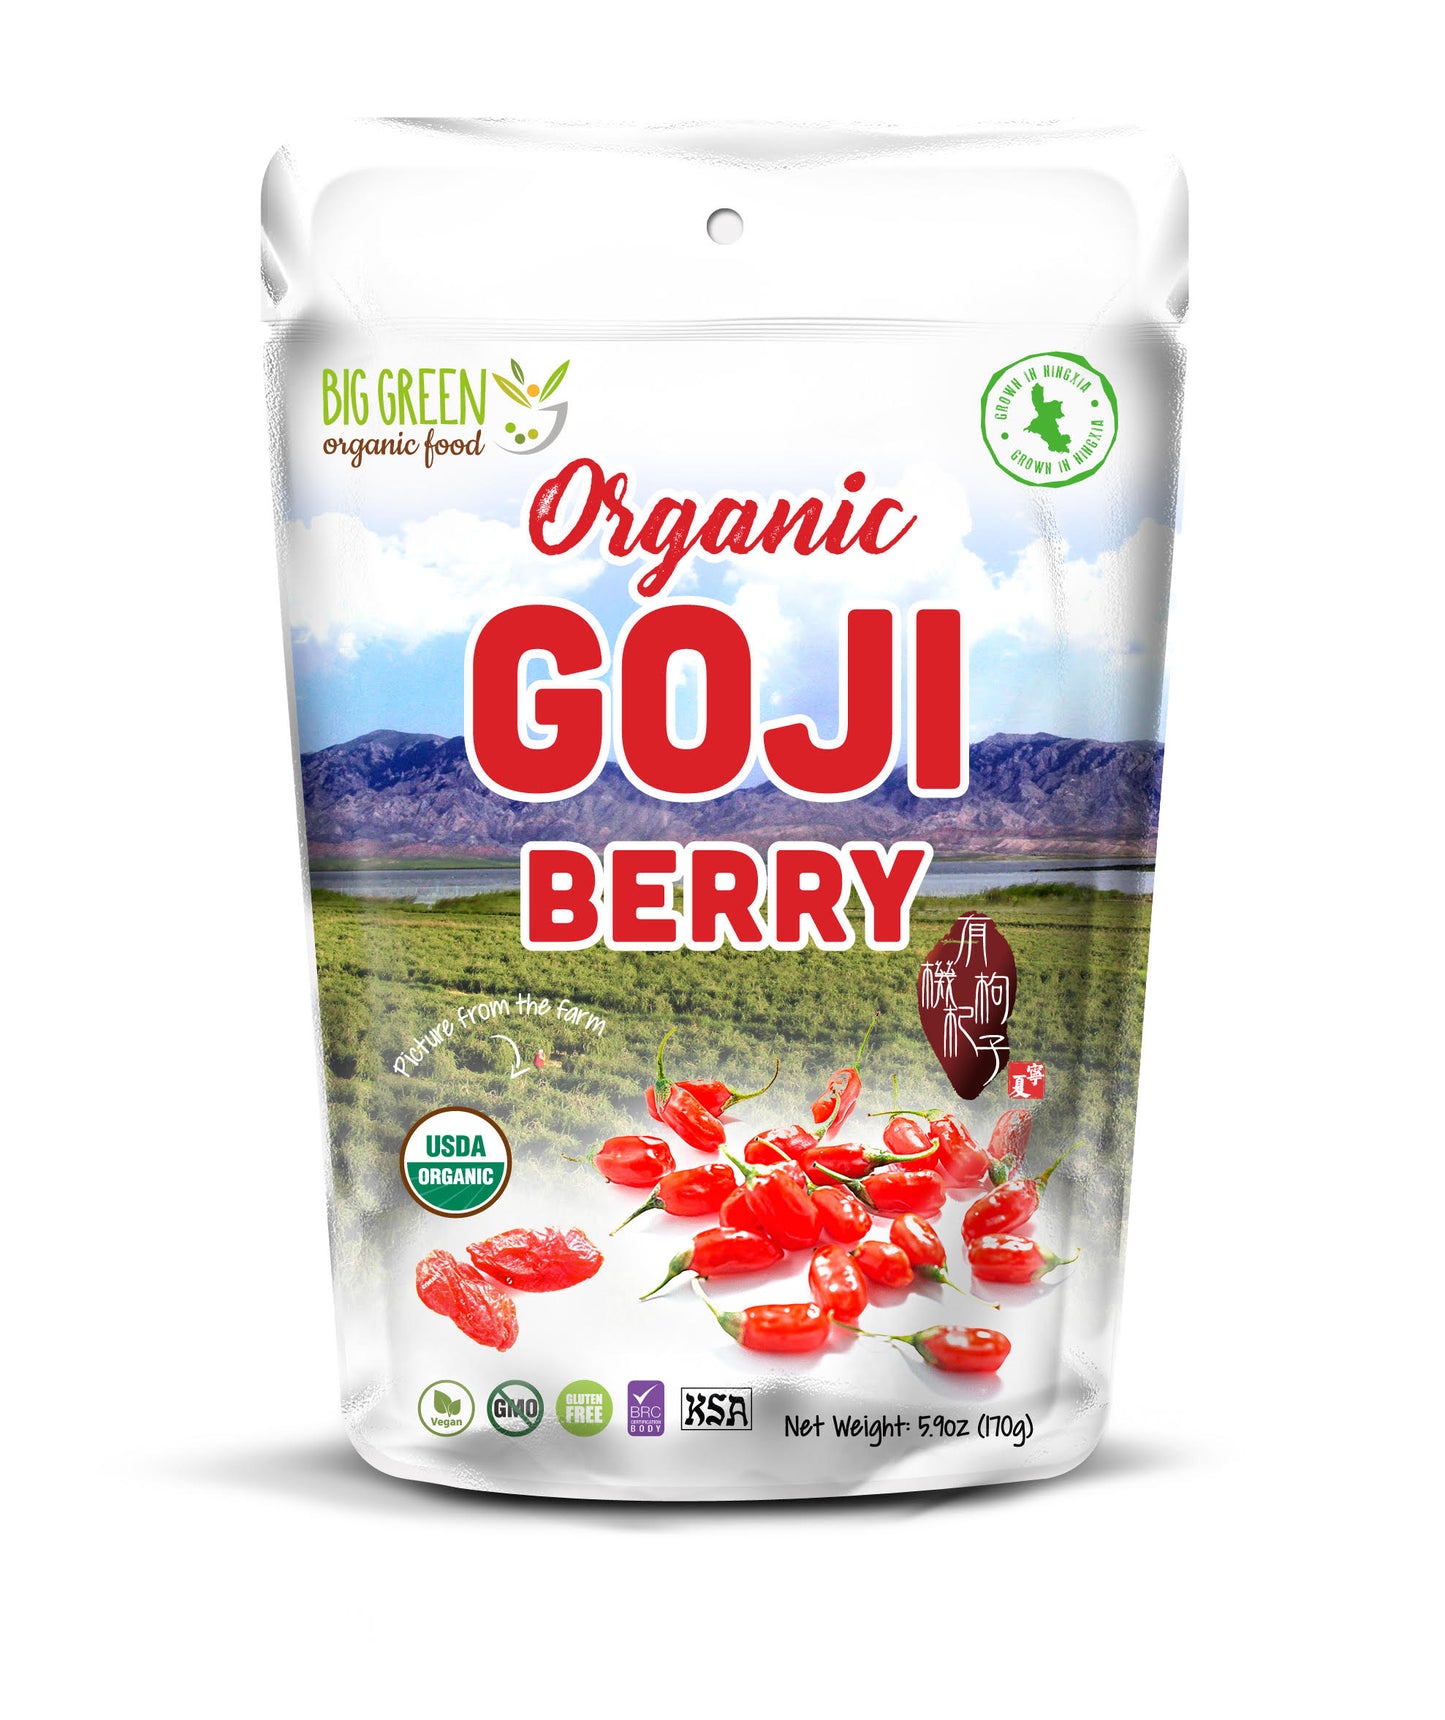 Big Green Organic Food Organic Goji Berry 有機寧夏枸杞